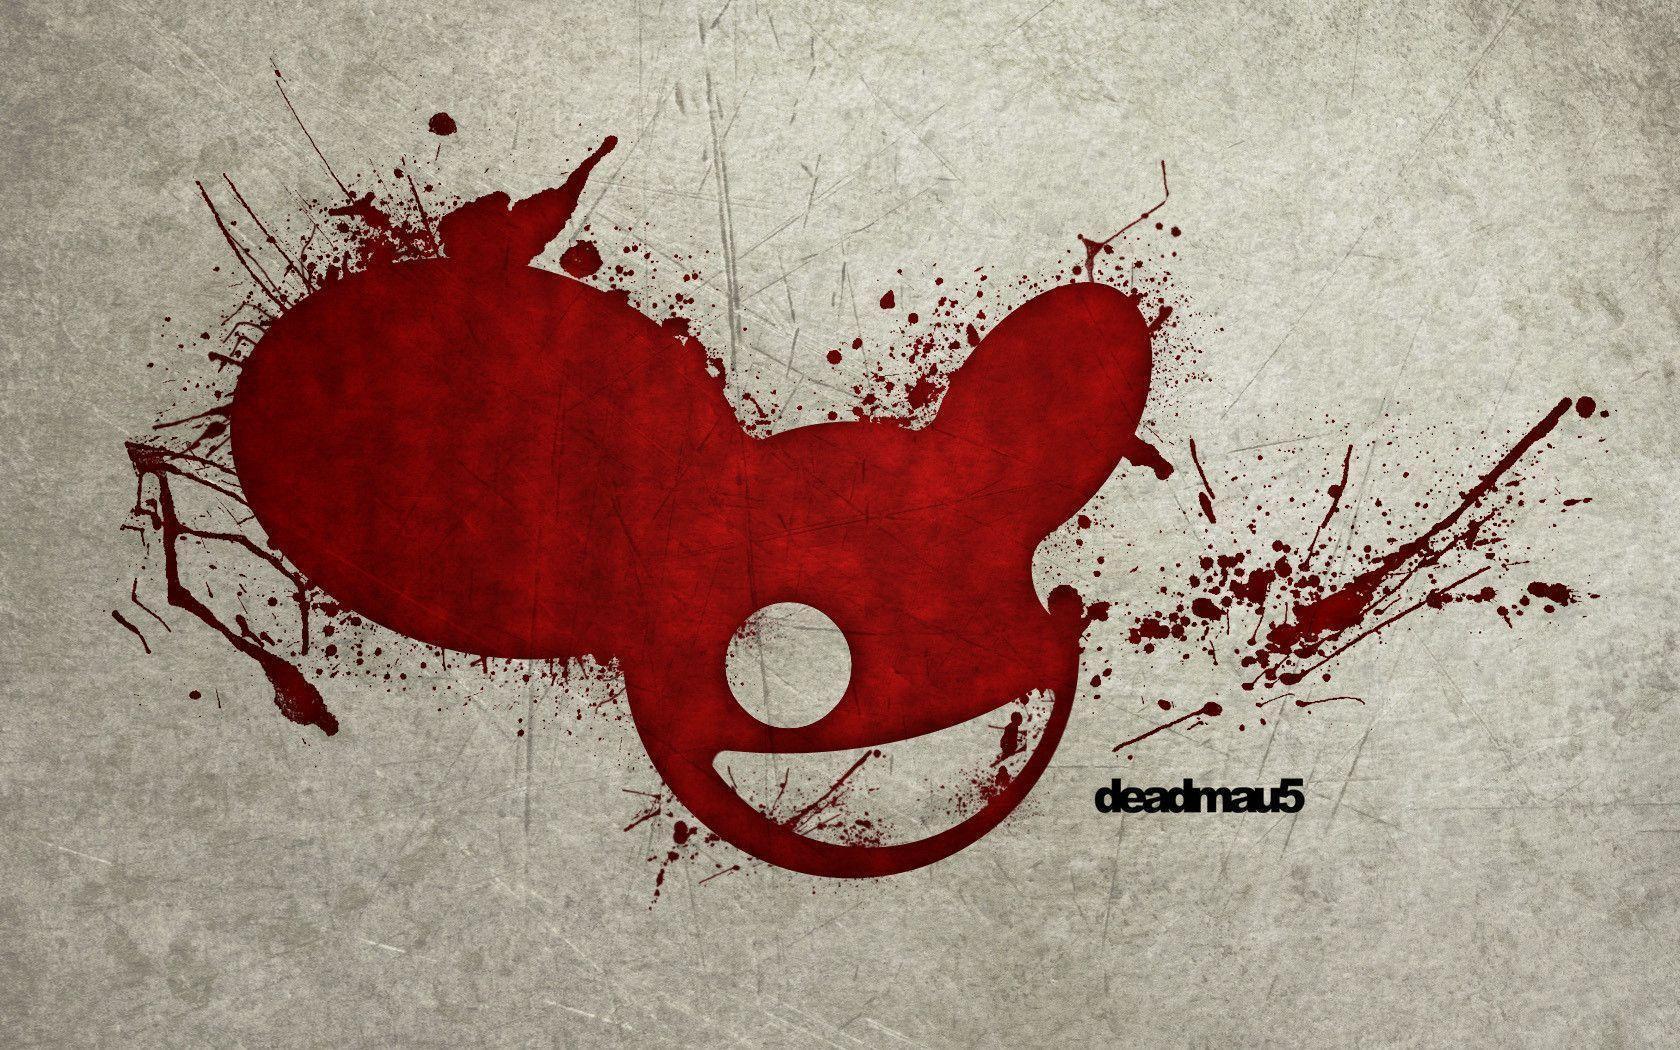 Deadmau5 HD Wallpaper. Free Download Wallpaper from wallpaperank.com